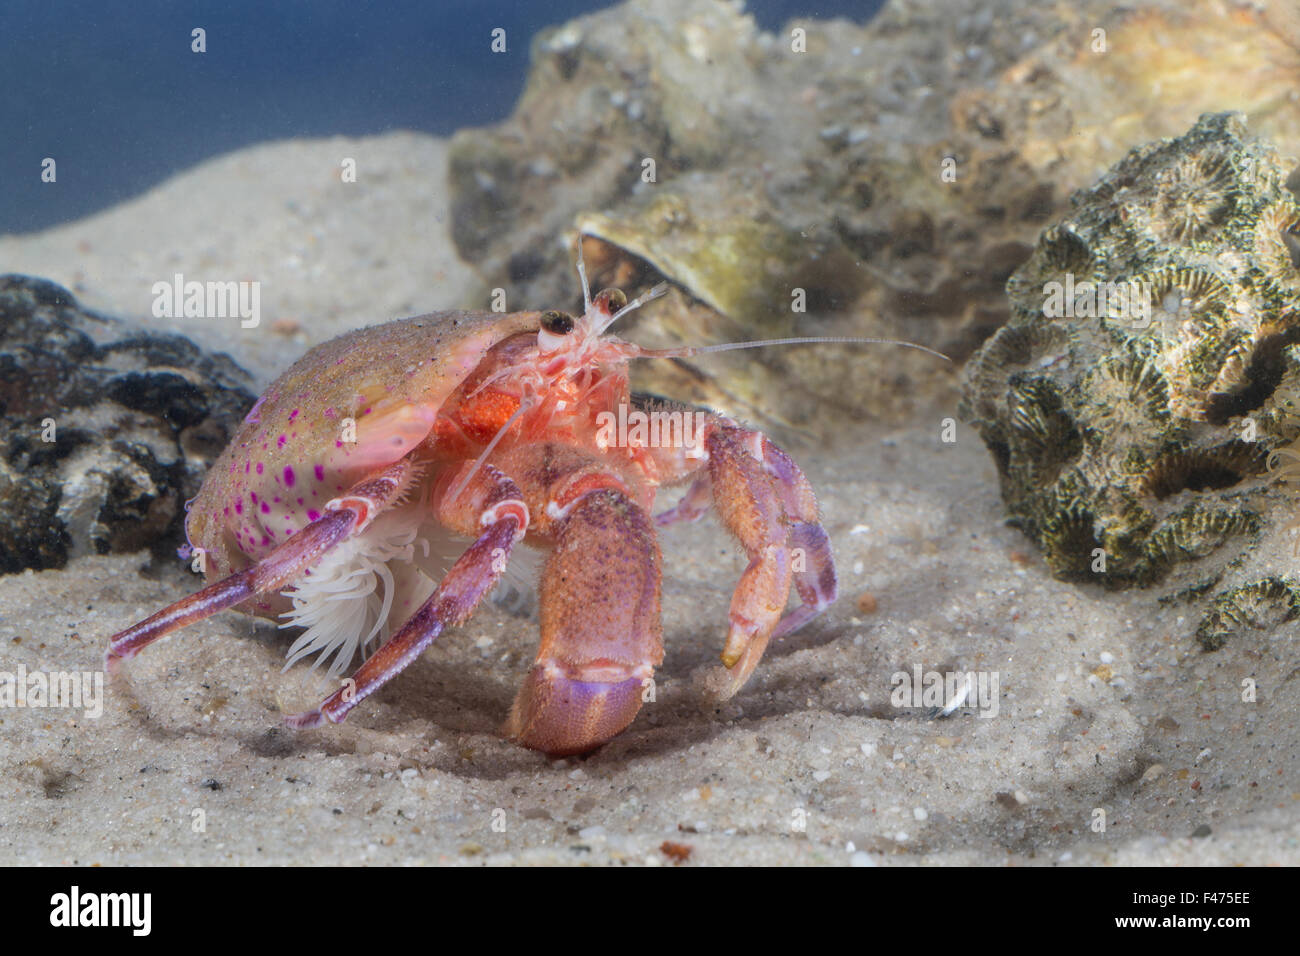 Anemone Hermit Crab, sea anemone, Anemonen-Einsiedlerkrebs, Mantelaktinie, Seeanemone, Pagurus prideaux, Adamsia palliata Stock Photo